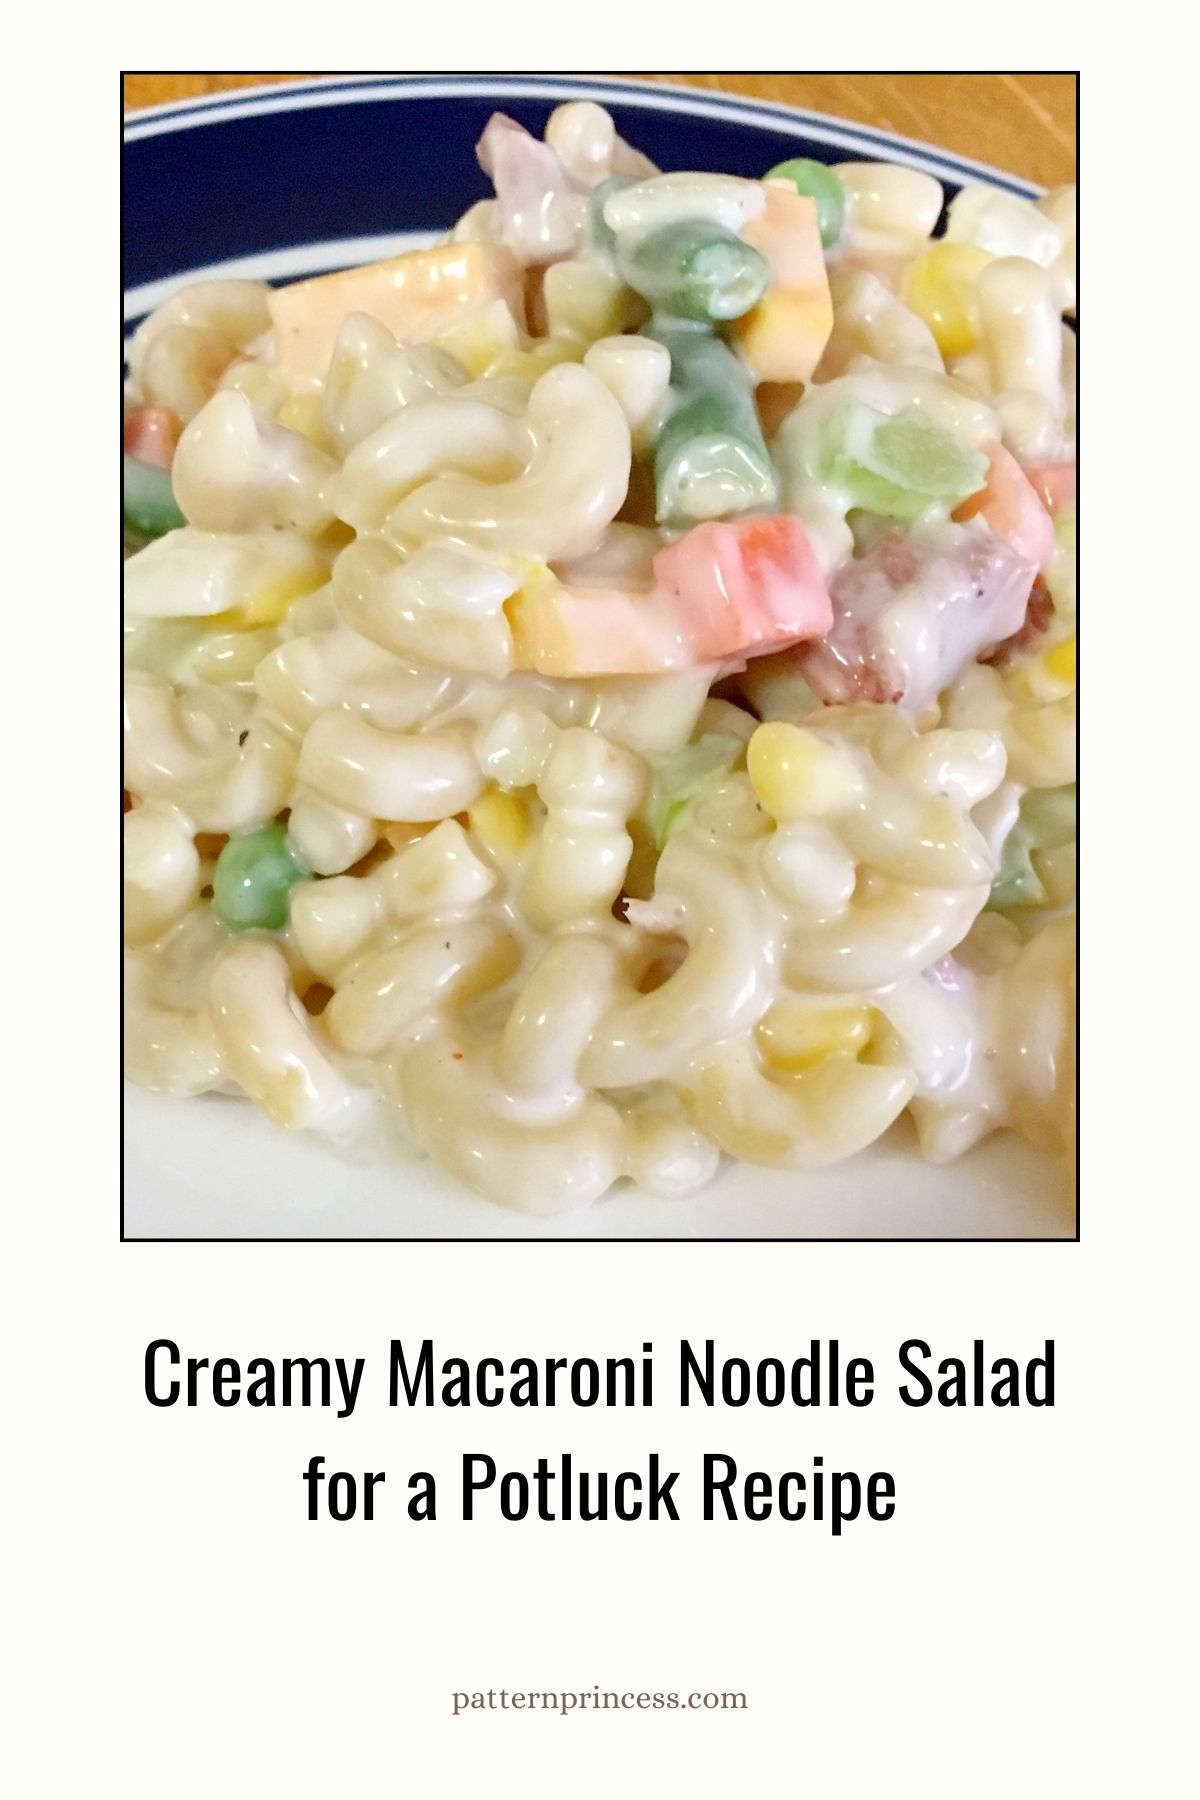 Creamy Macaroni Noodle Salad for a Potluck Recipe